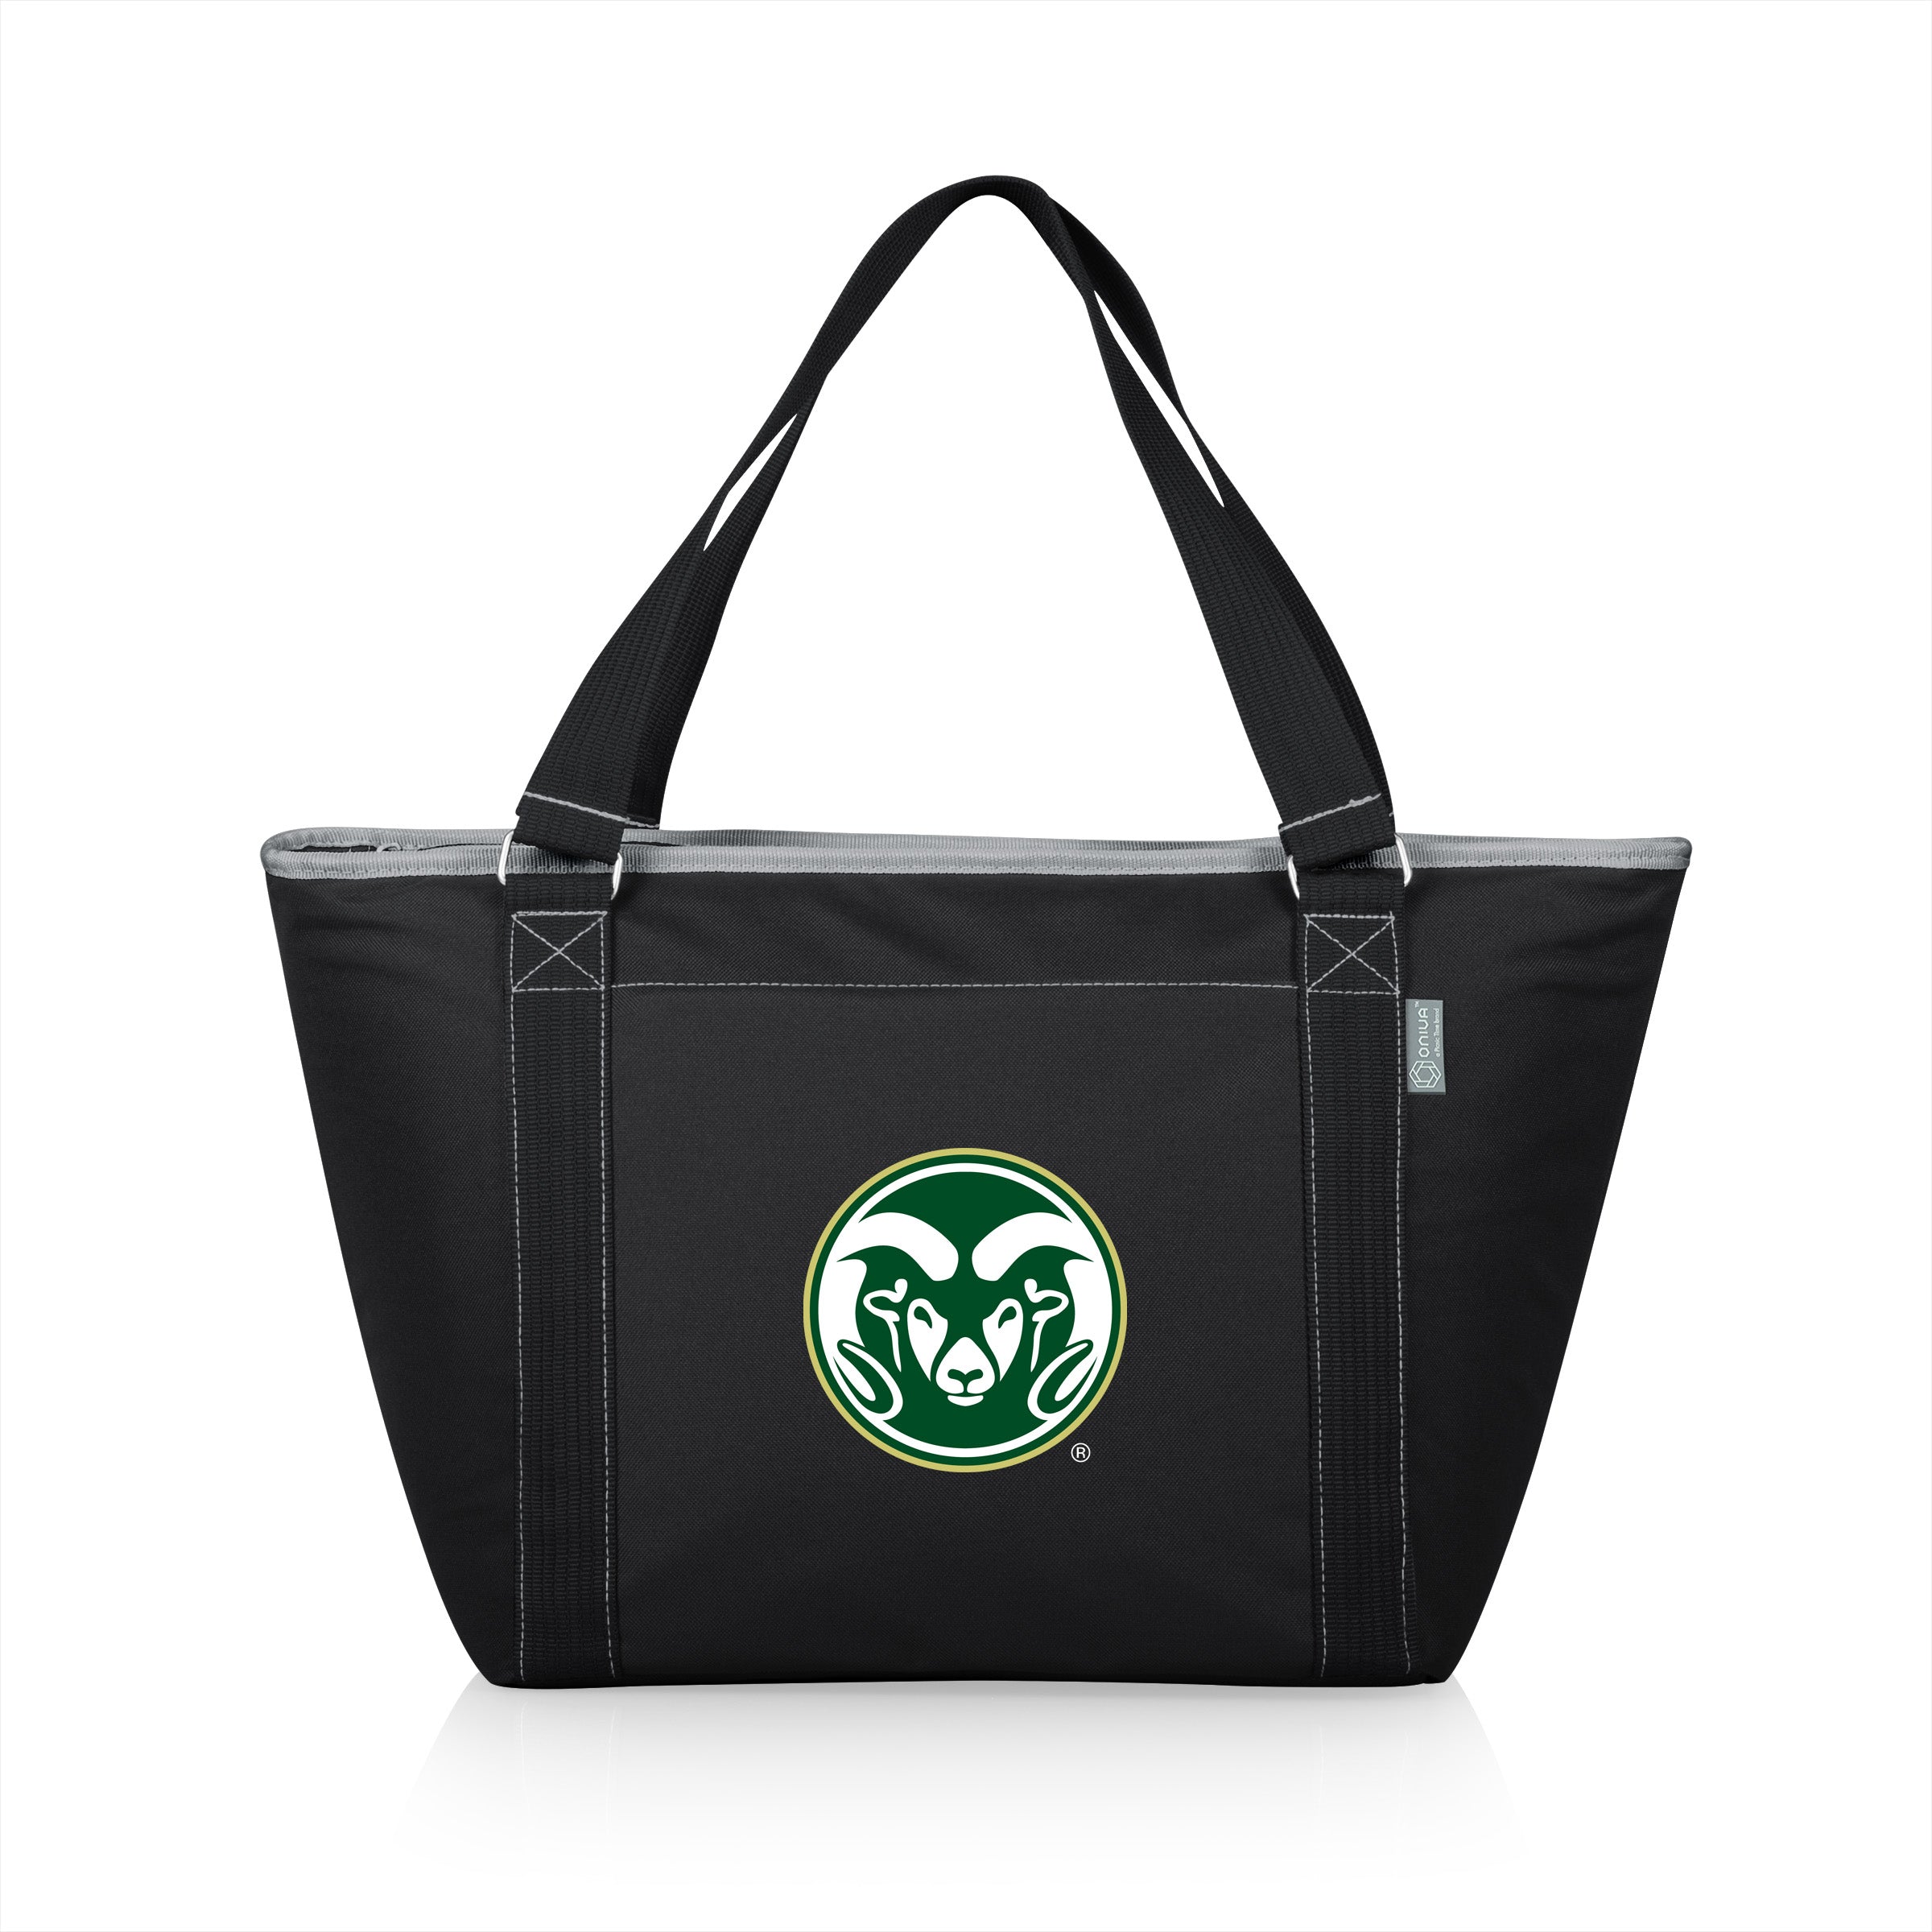 Colorado State Rams - Topanga Cooler Tote Bag